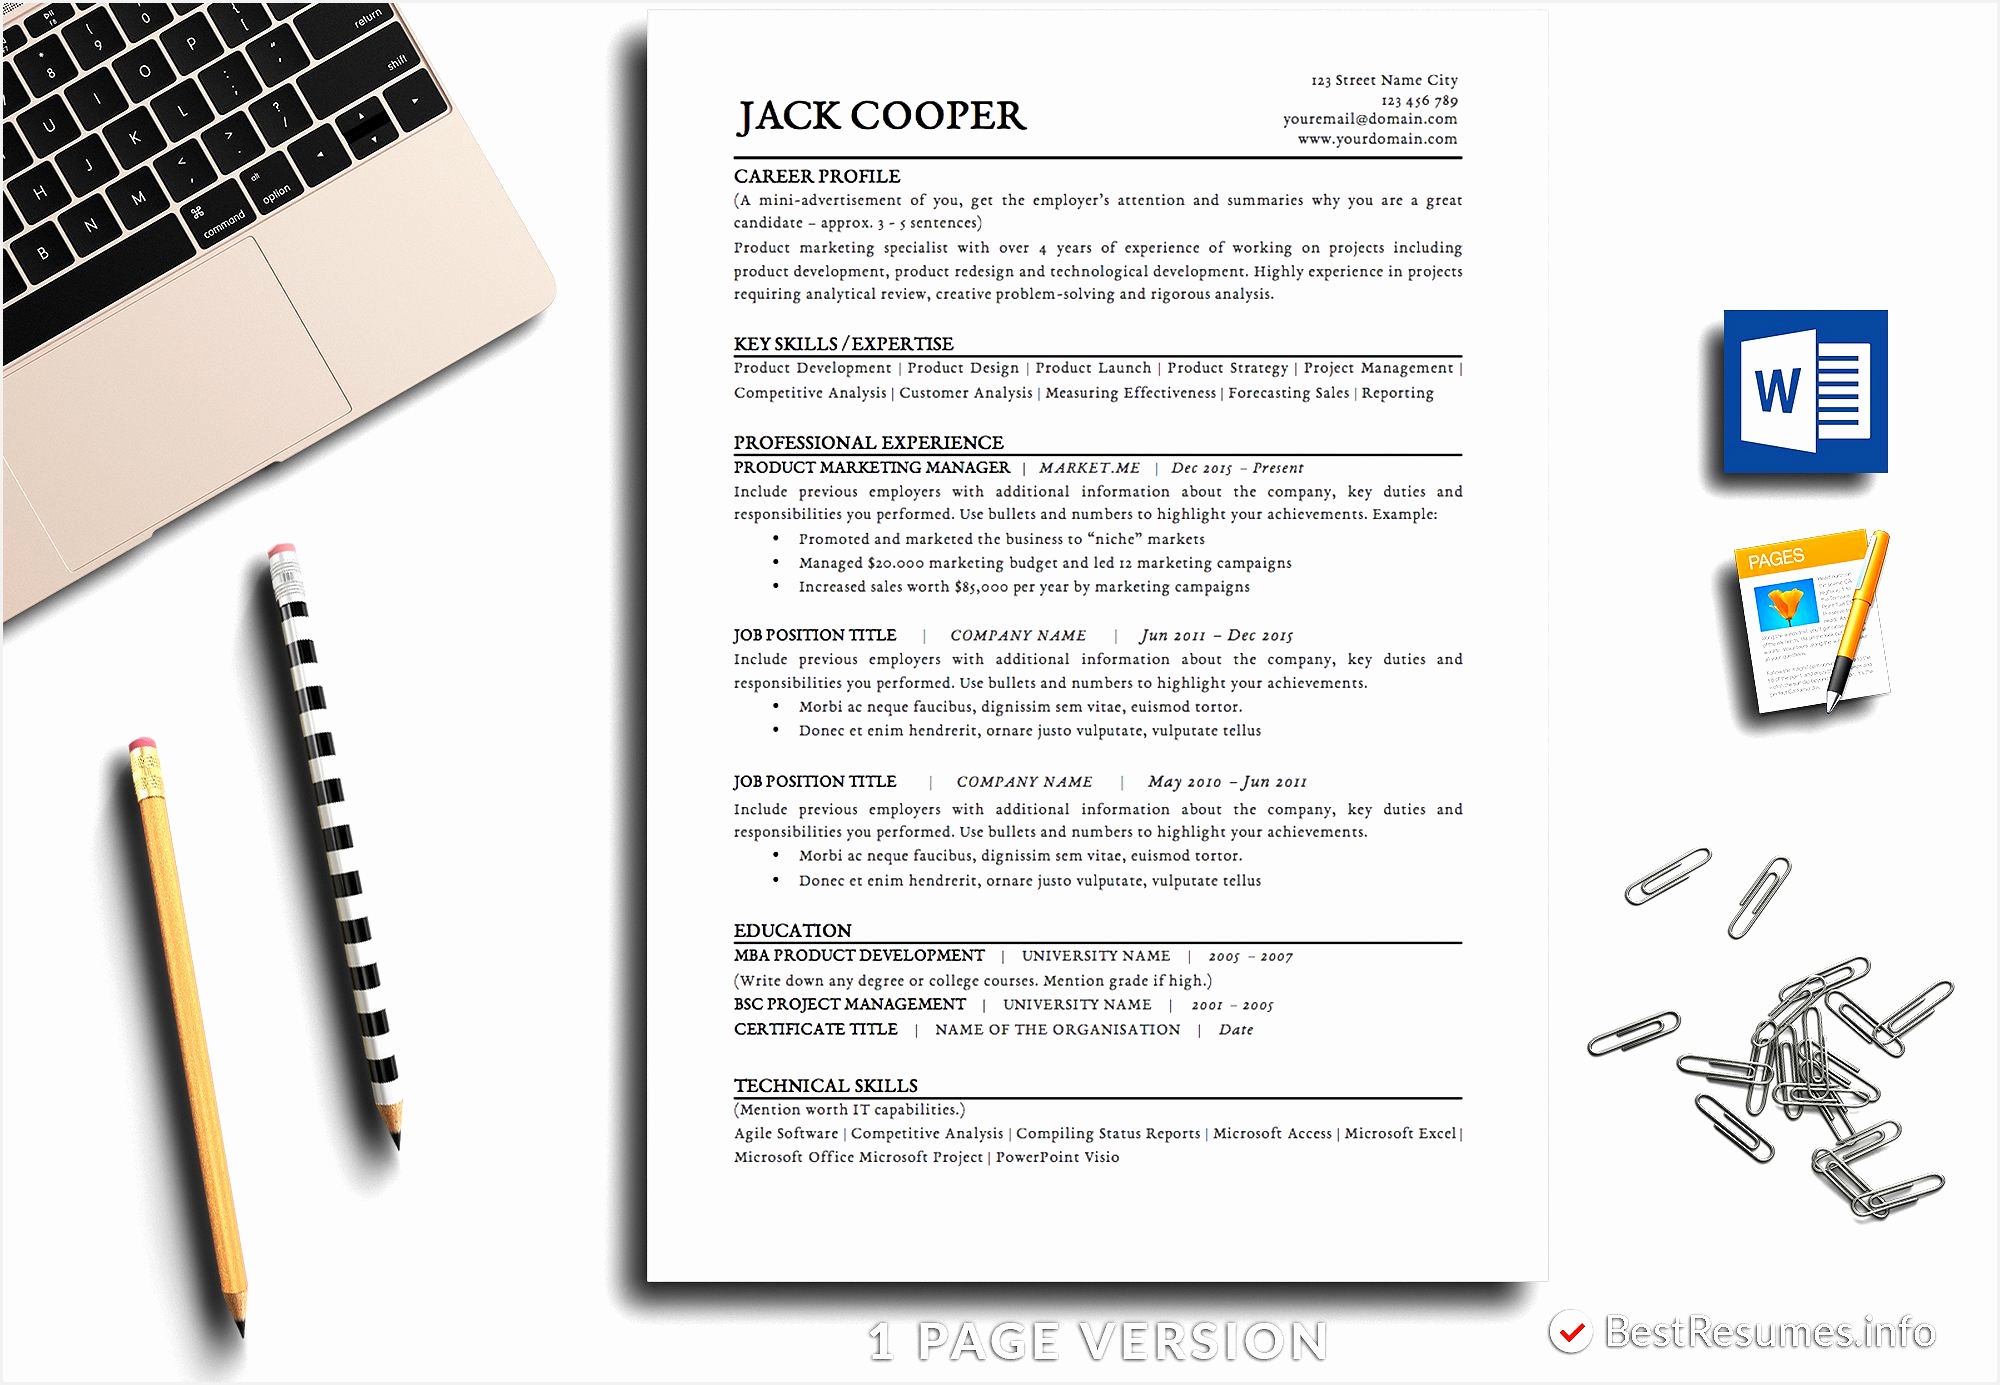 resume template jack cooper resume13852000